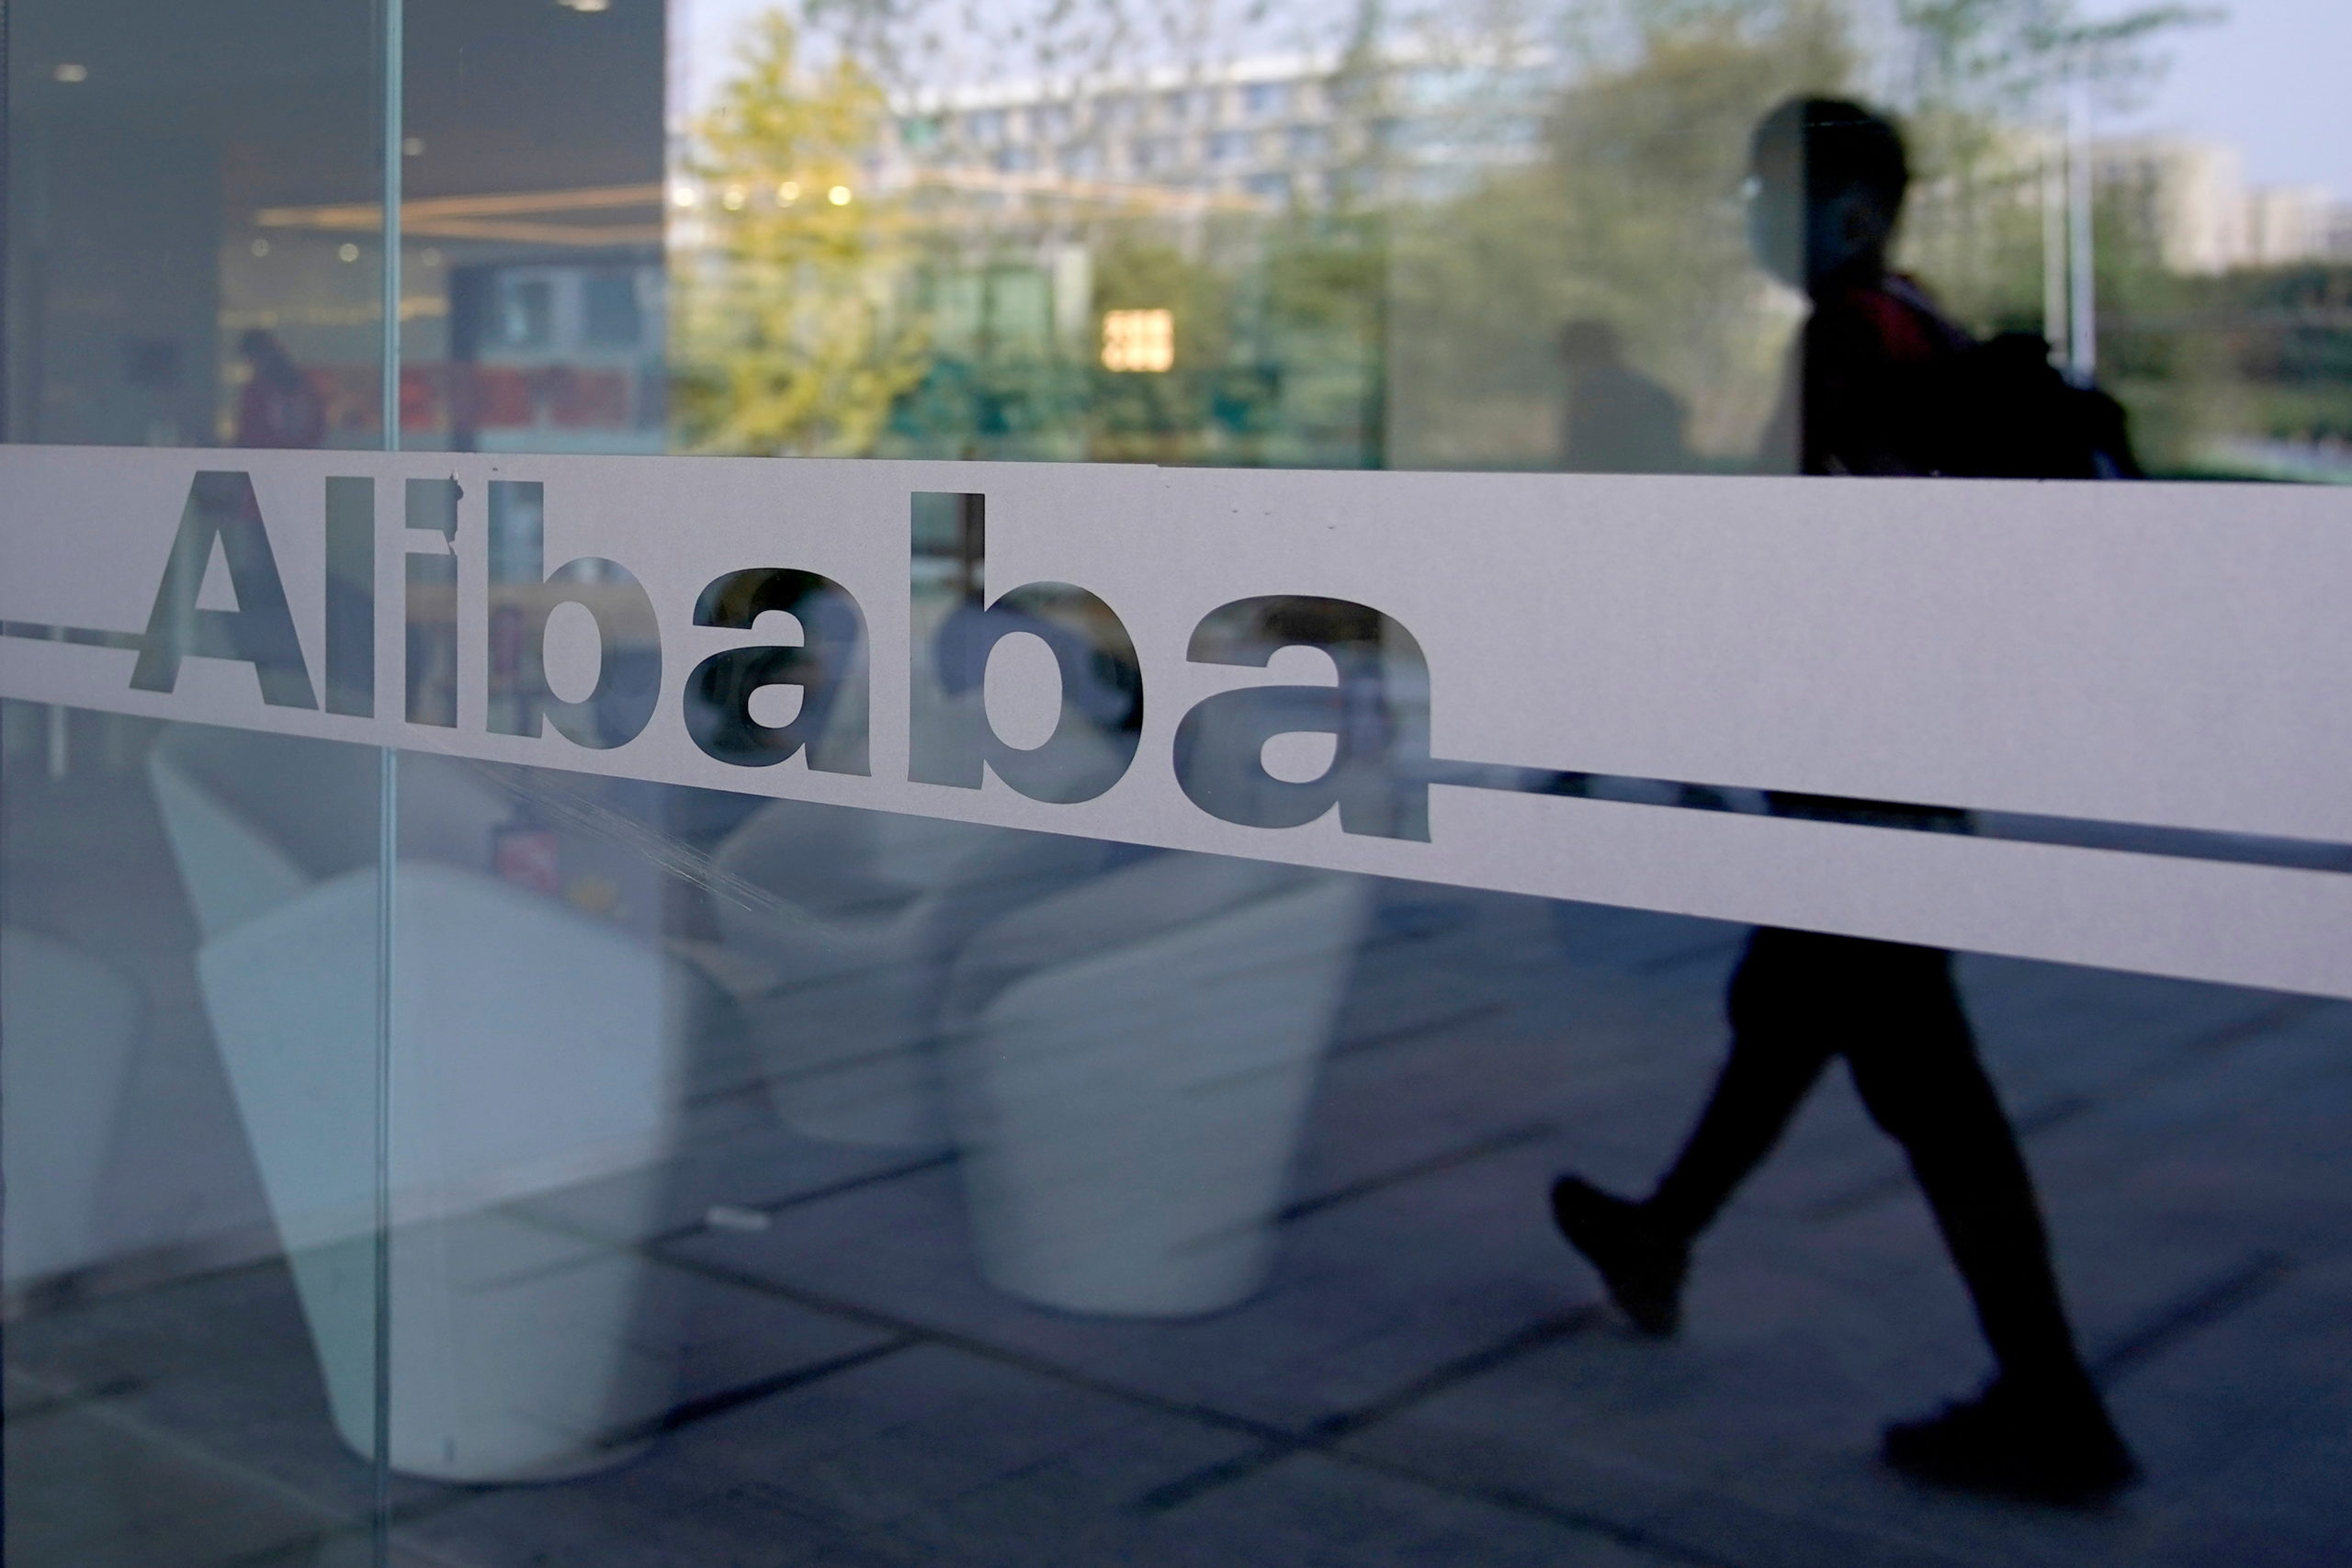 Alibaba shrugs off $2.75B antitrust fine, shares rally